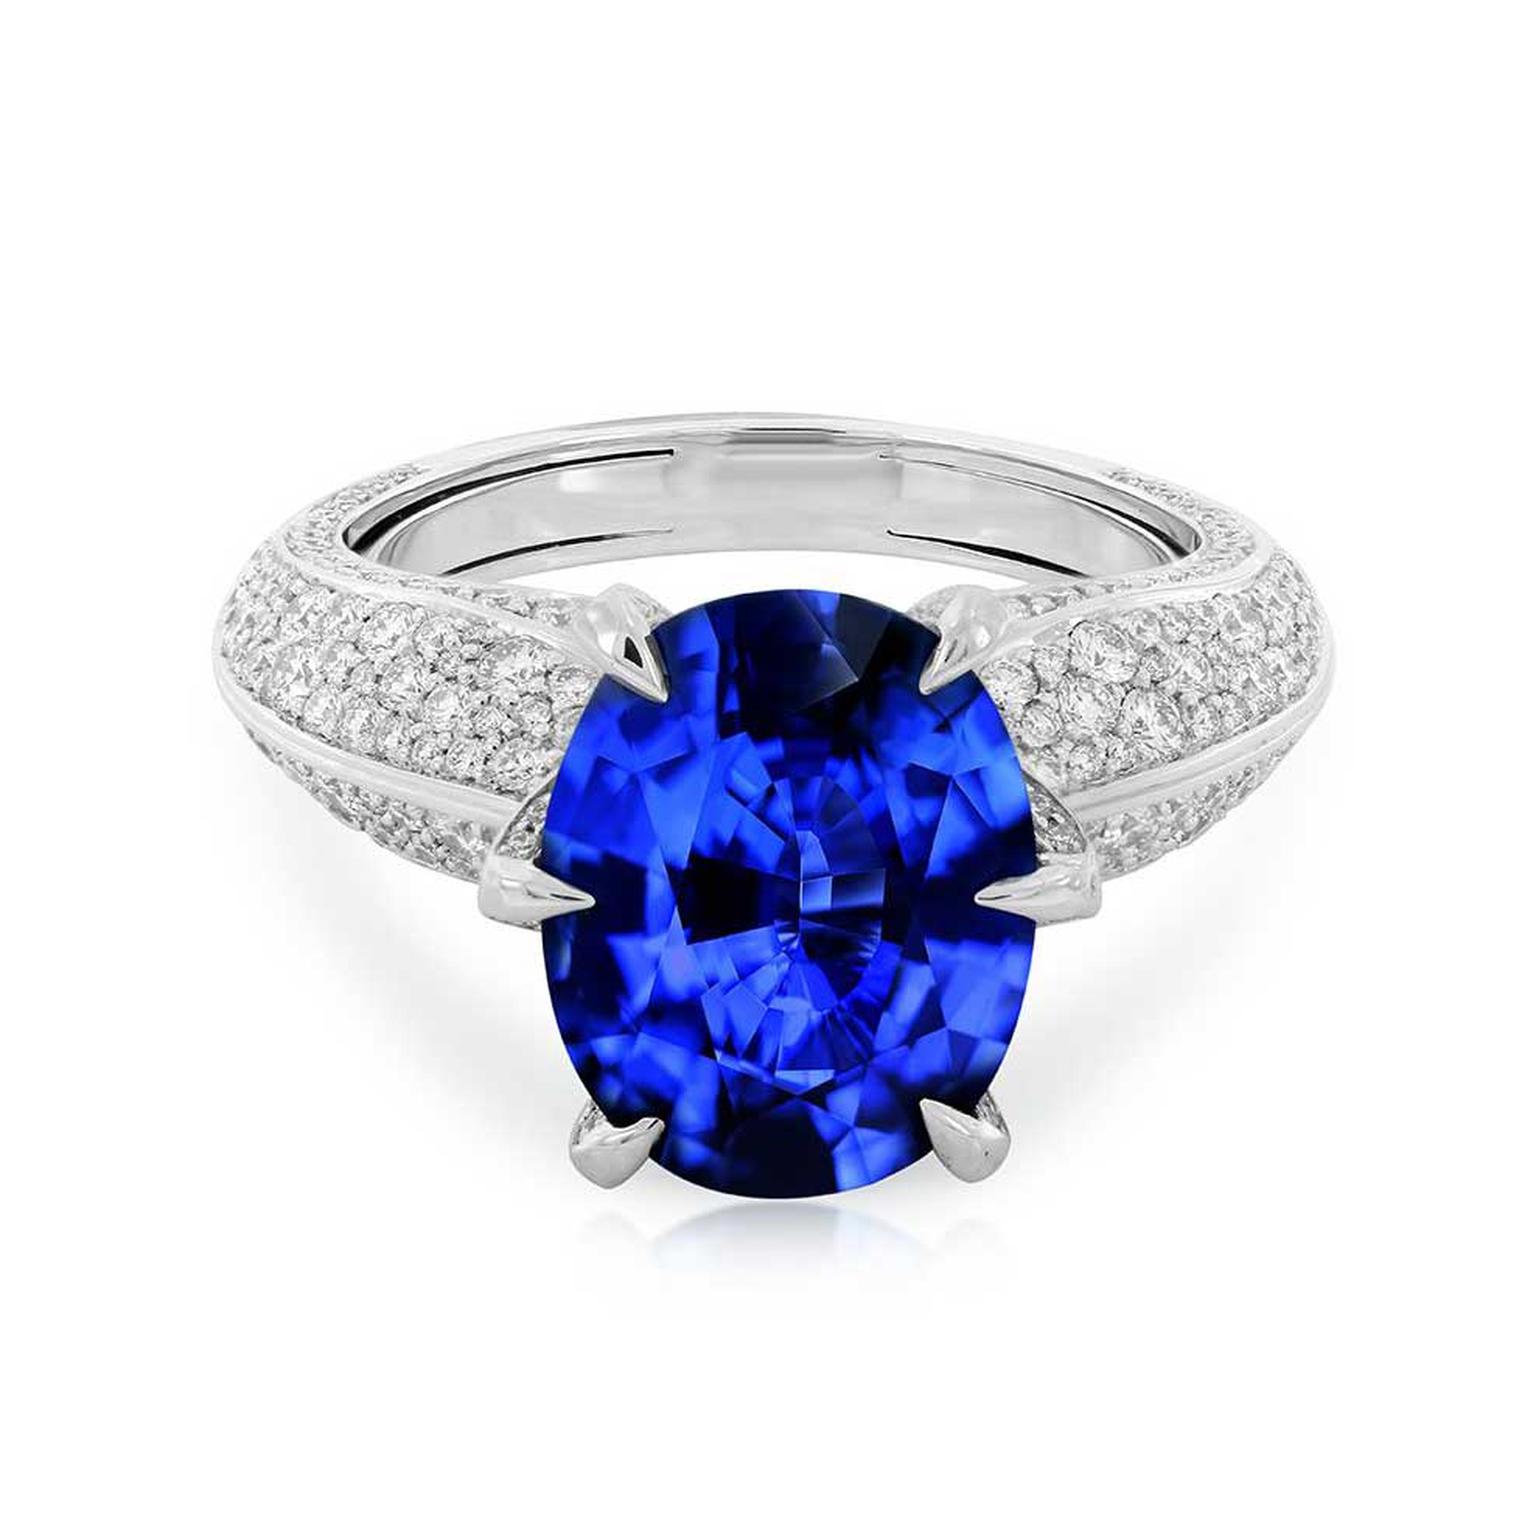 Kat Florence Ceylon sapphire engagement ring